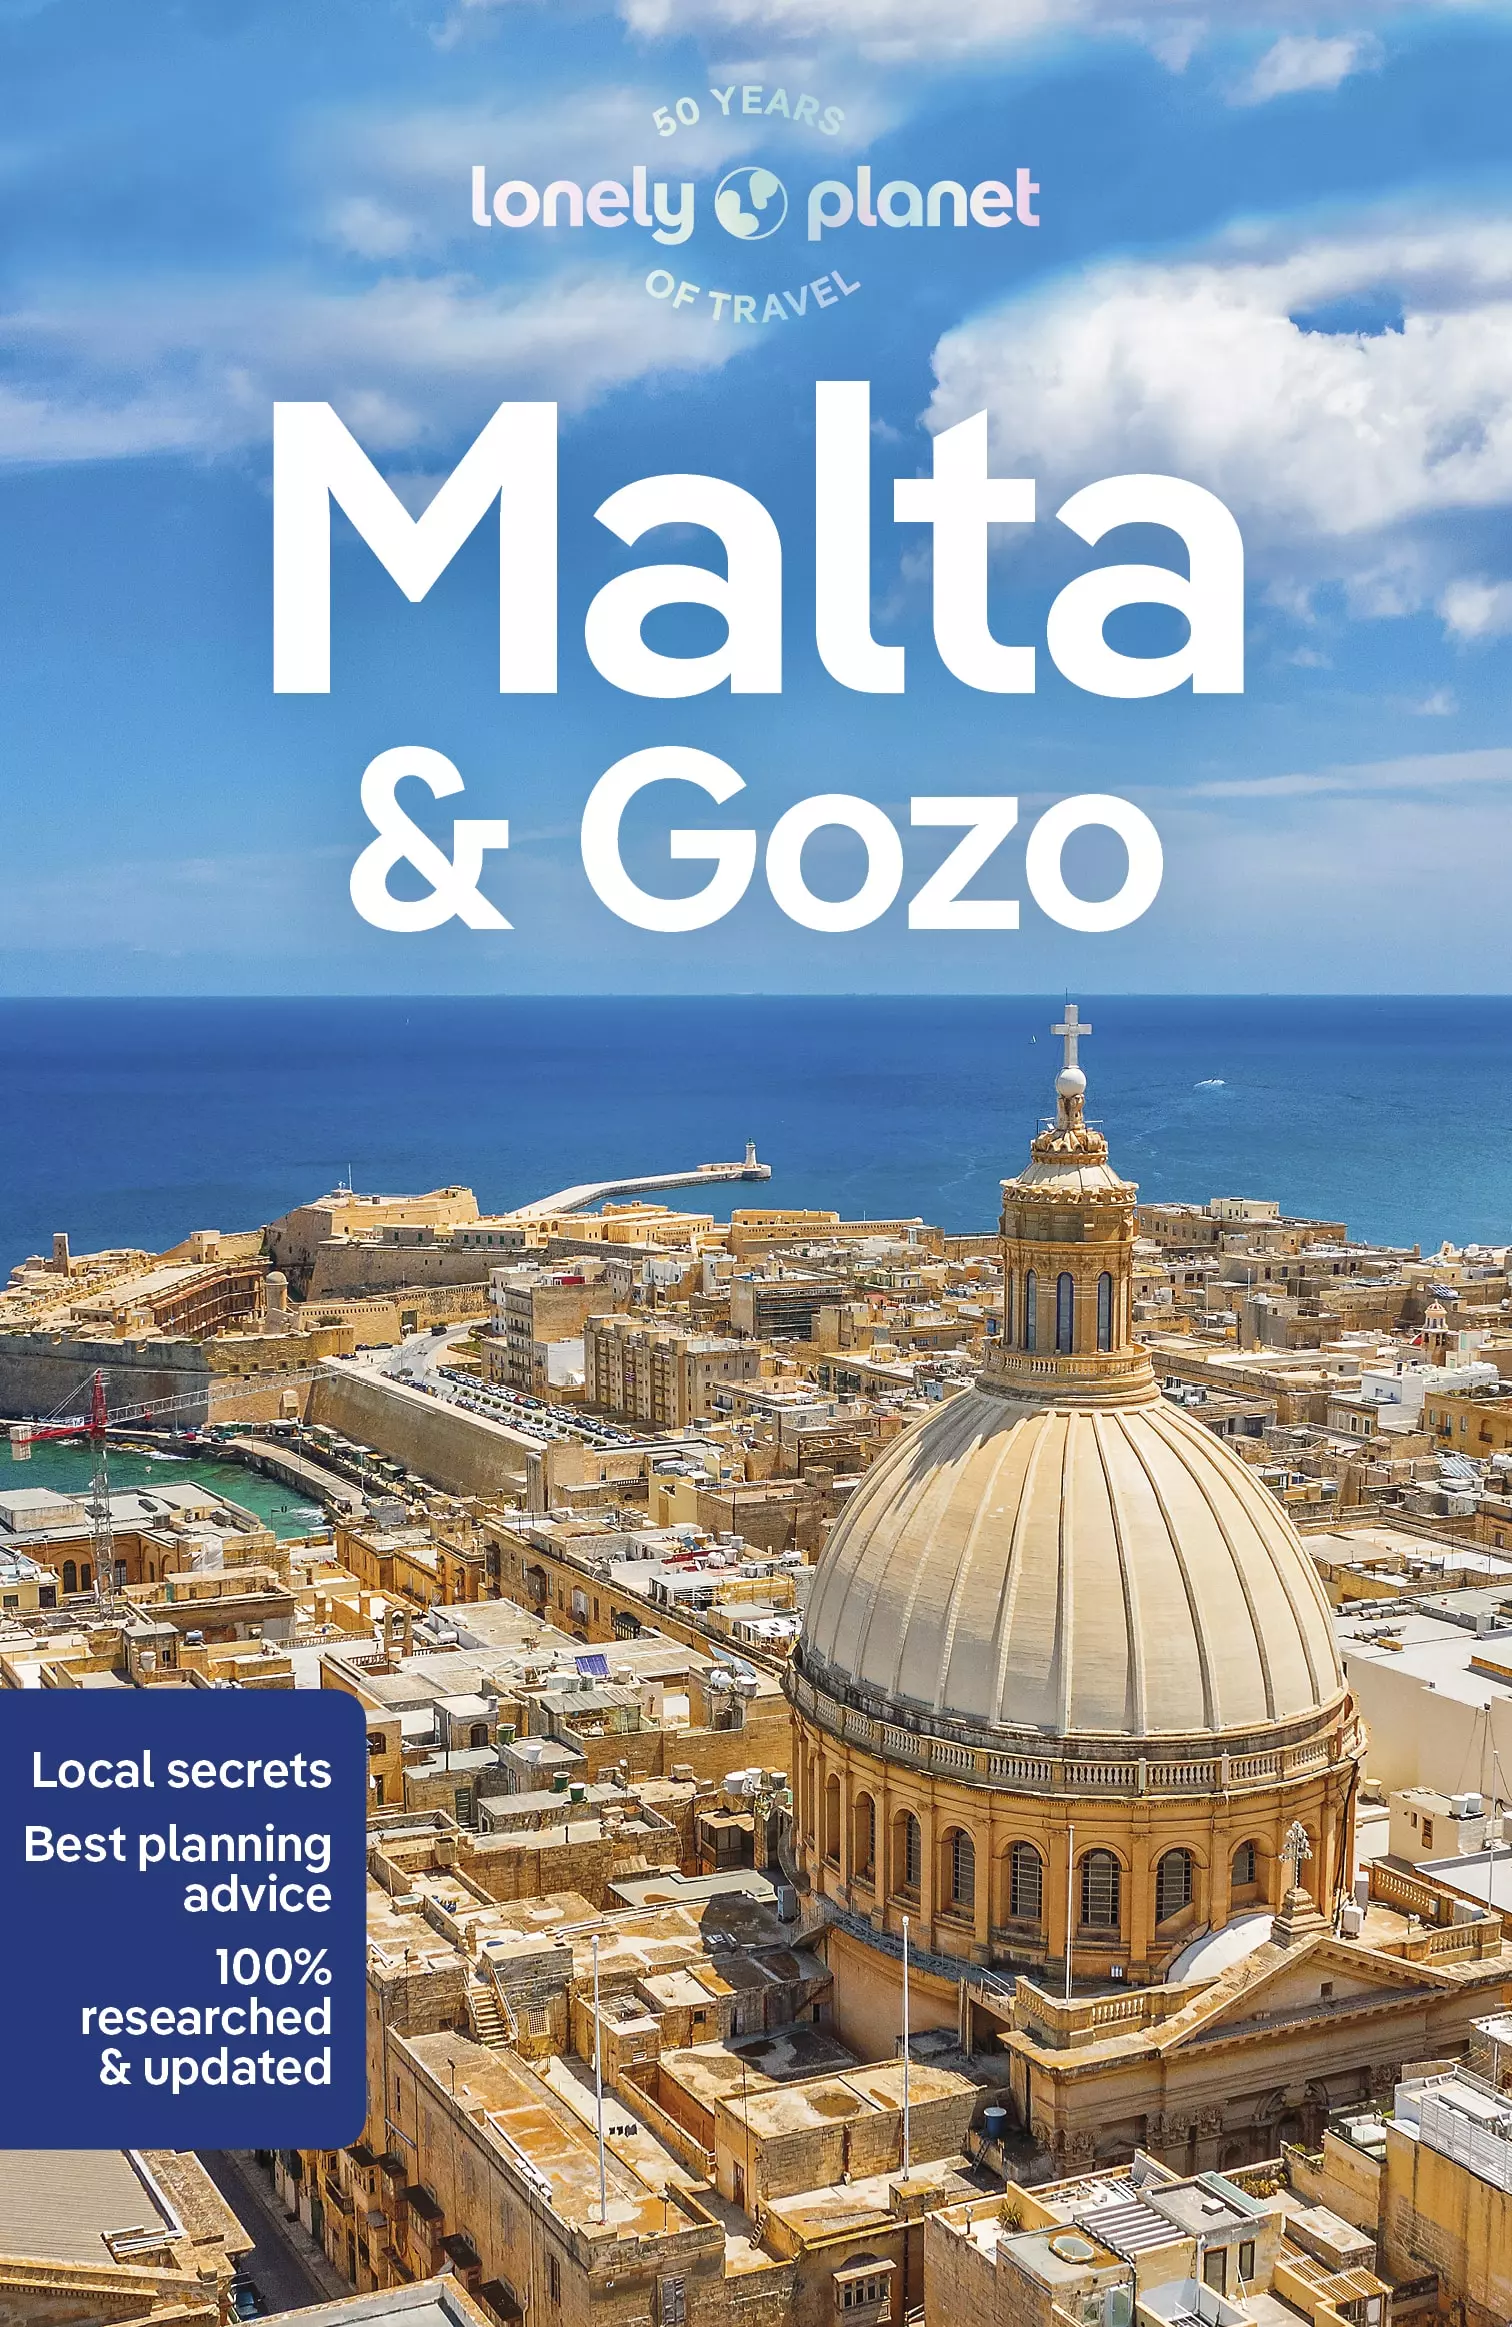 Malta si Gozo ghid turistic Lonely Planet (engleză)